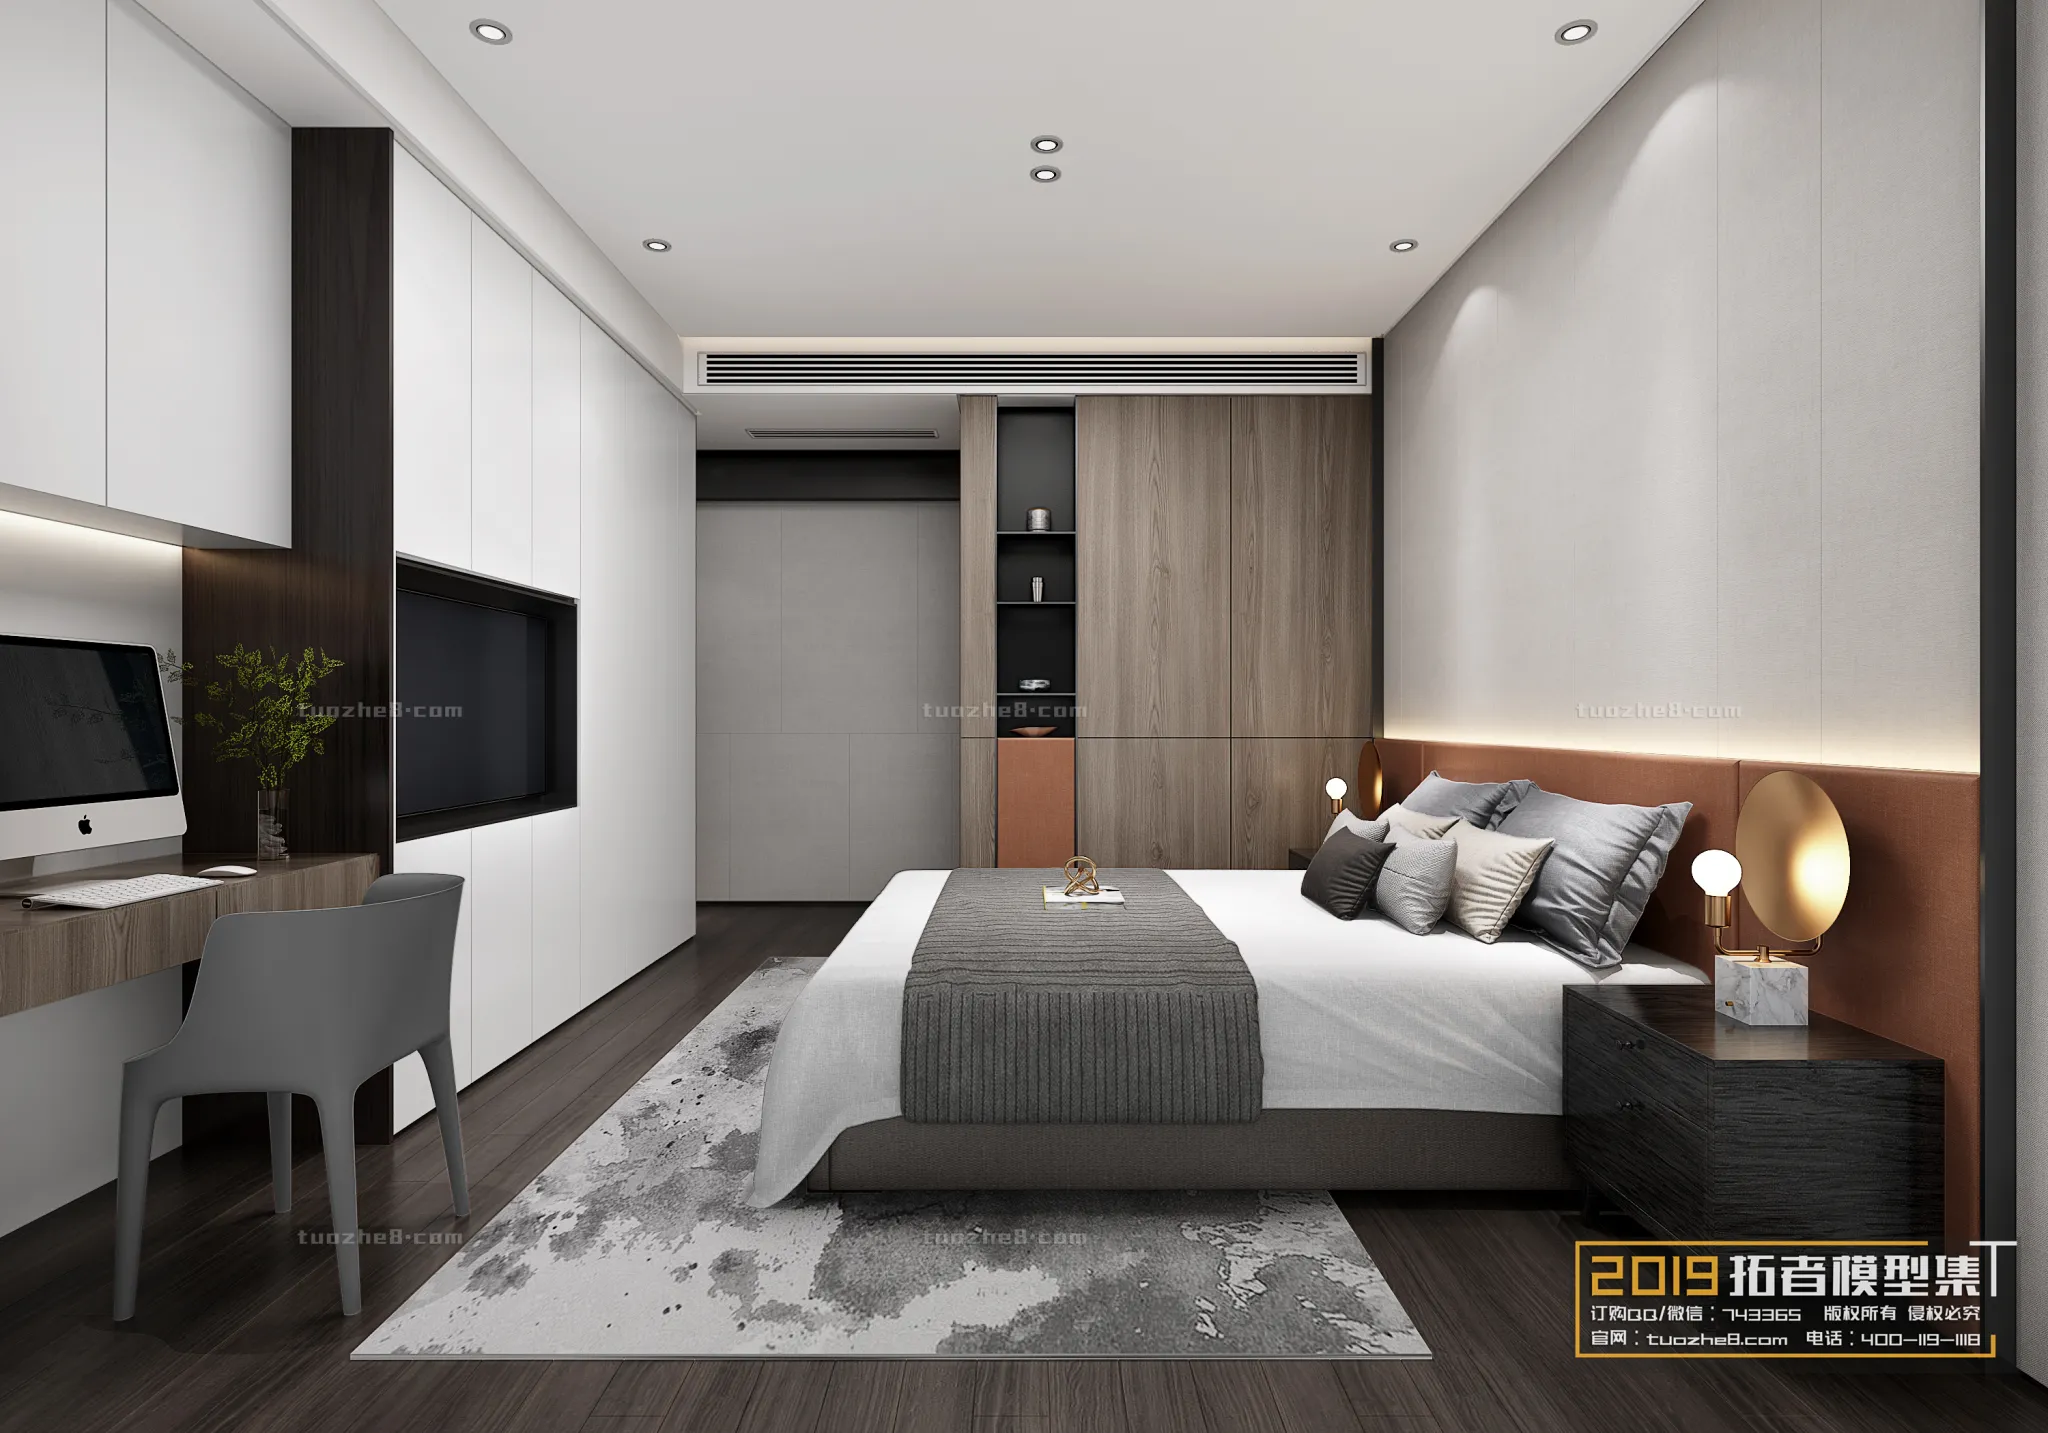 Extension Interior – BEDROOM – MODERNSTYLES – 002